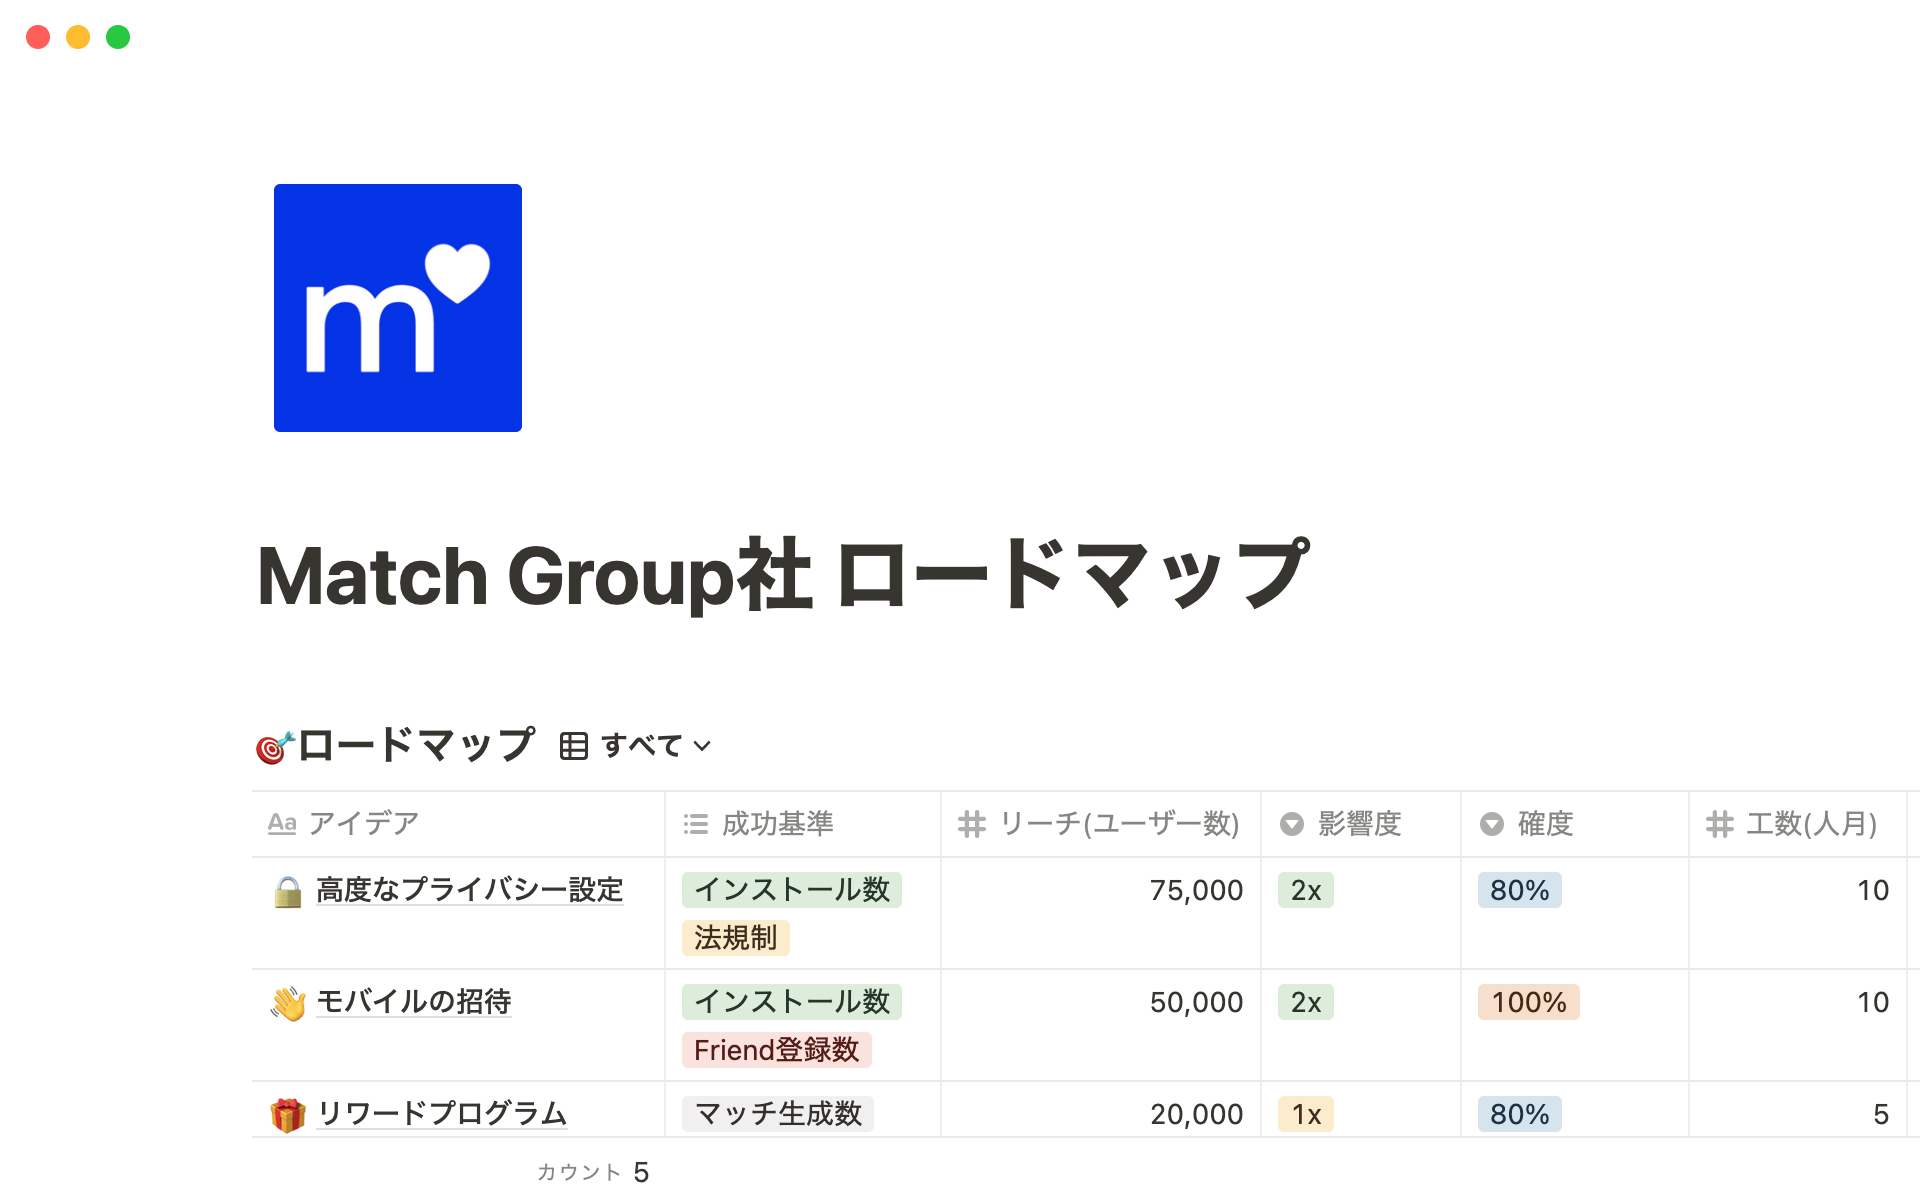 Match Group社 ロードマップテンプレートのデスクトップ画像